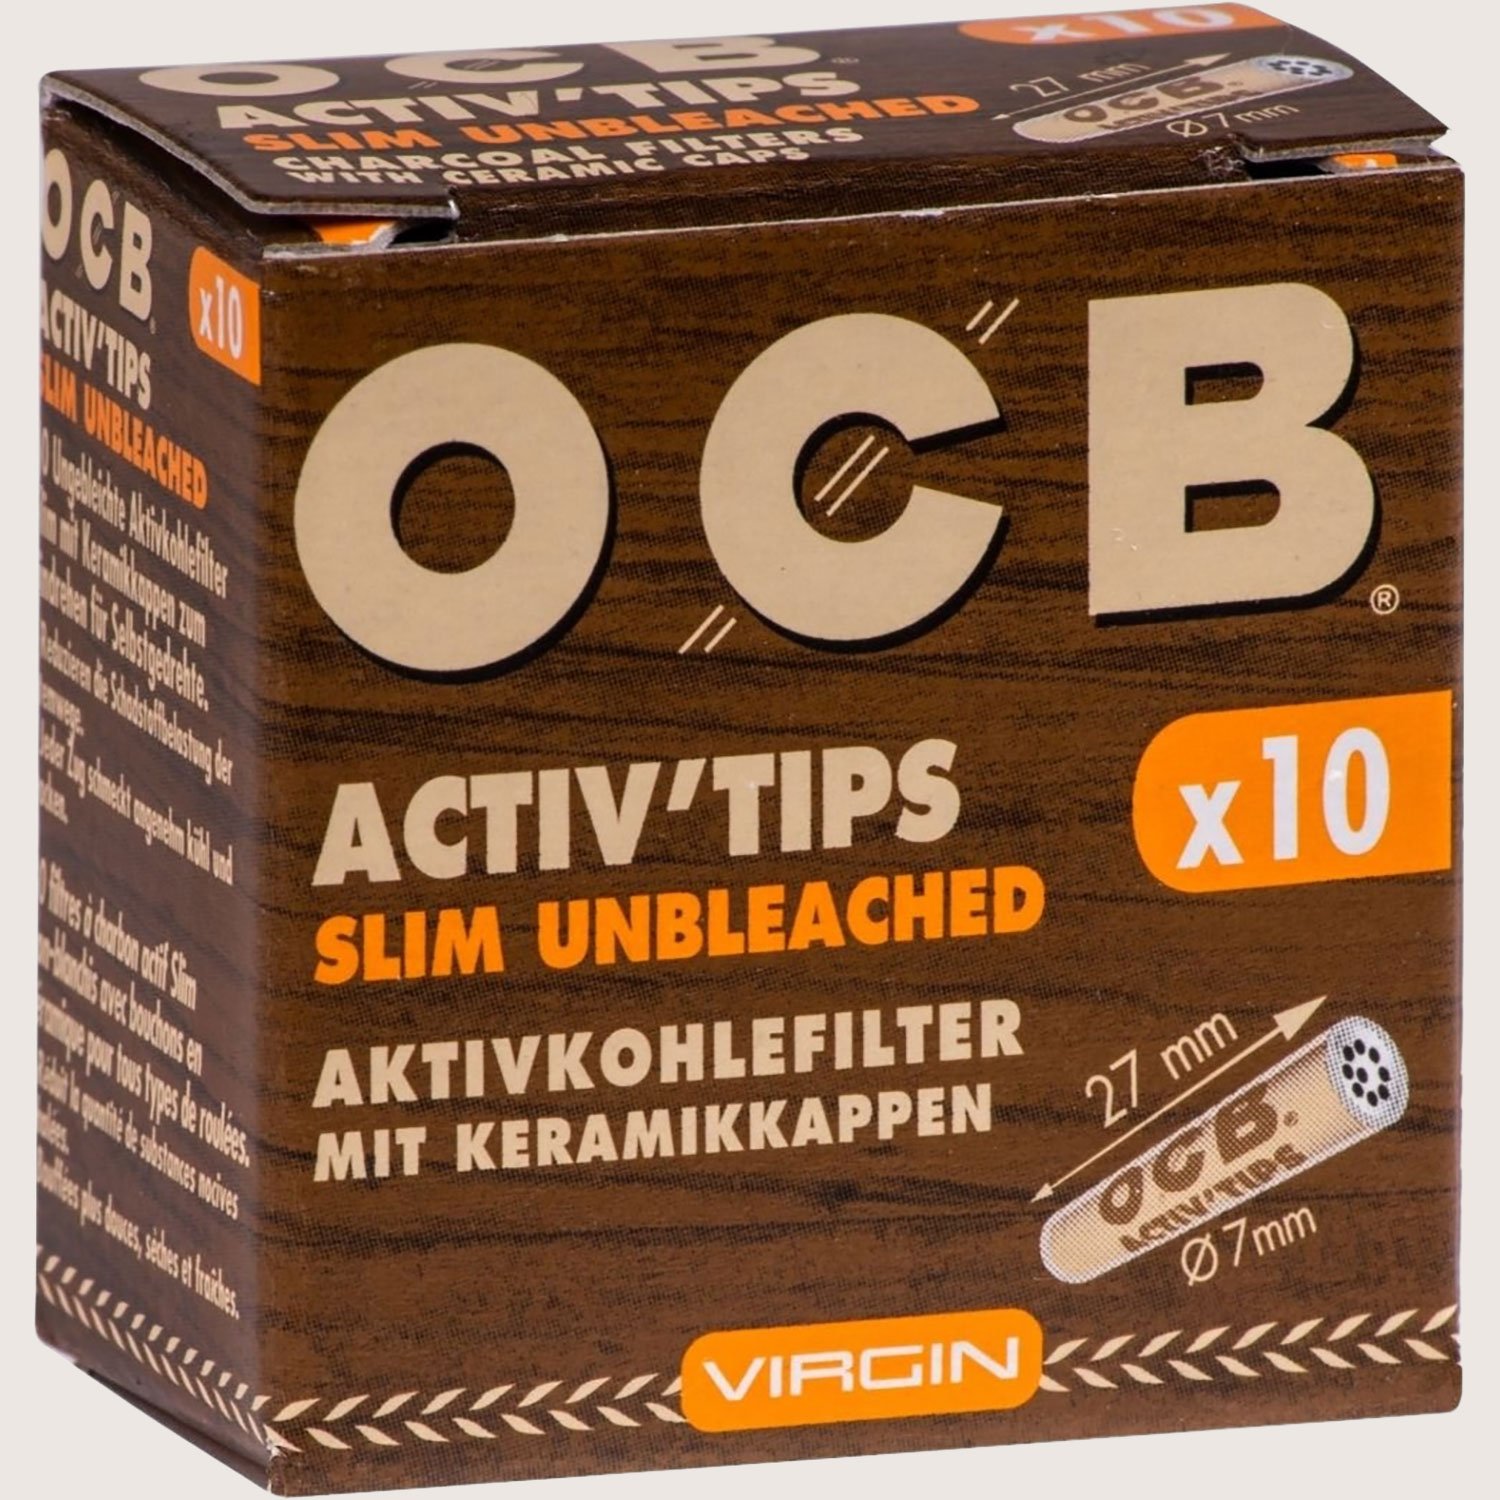 OCB ActivTips Slim Unbleached 7 mm 10 Filter